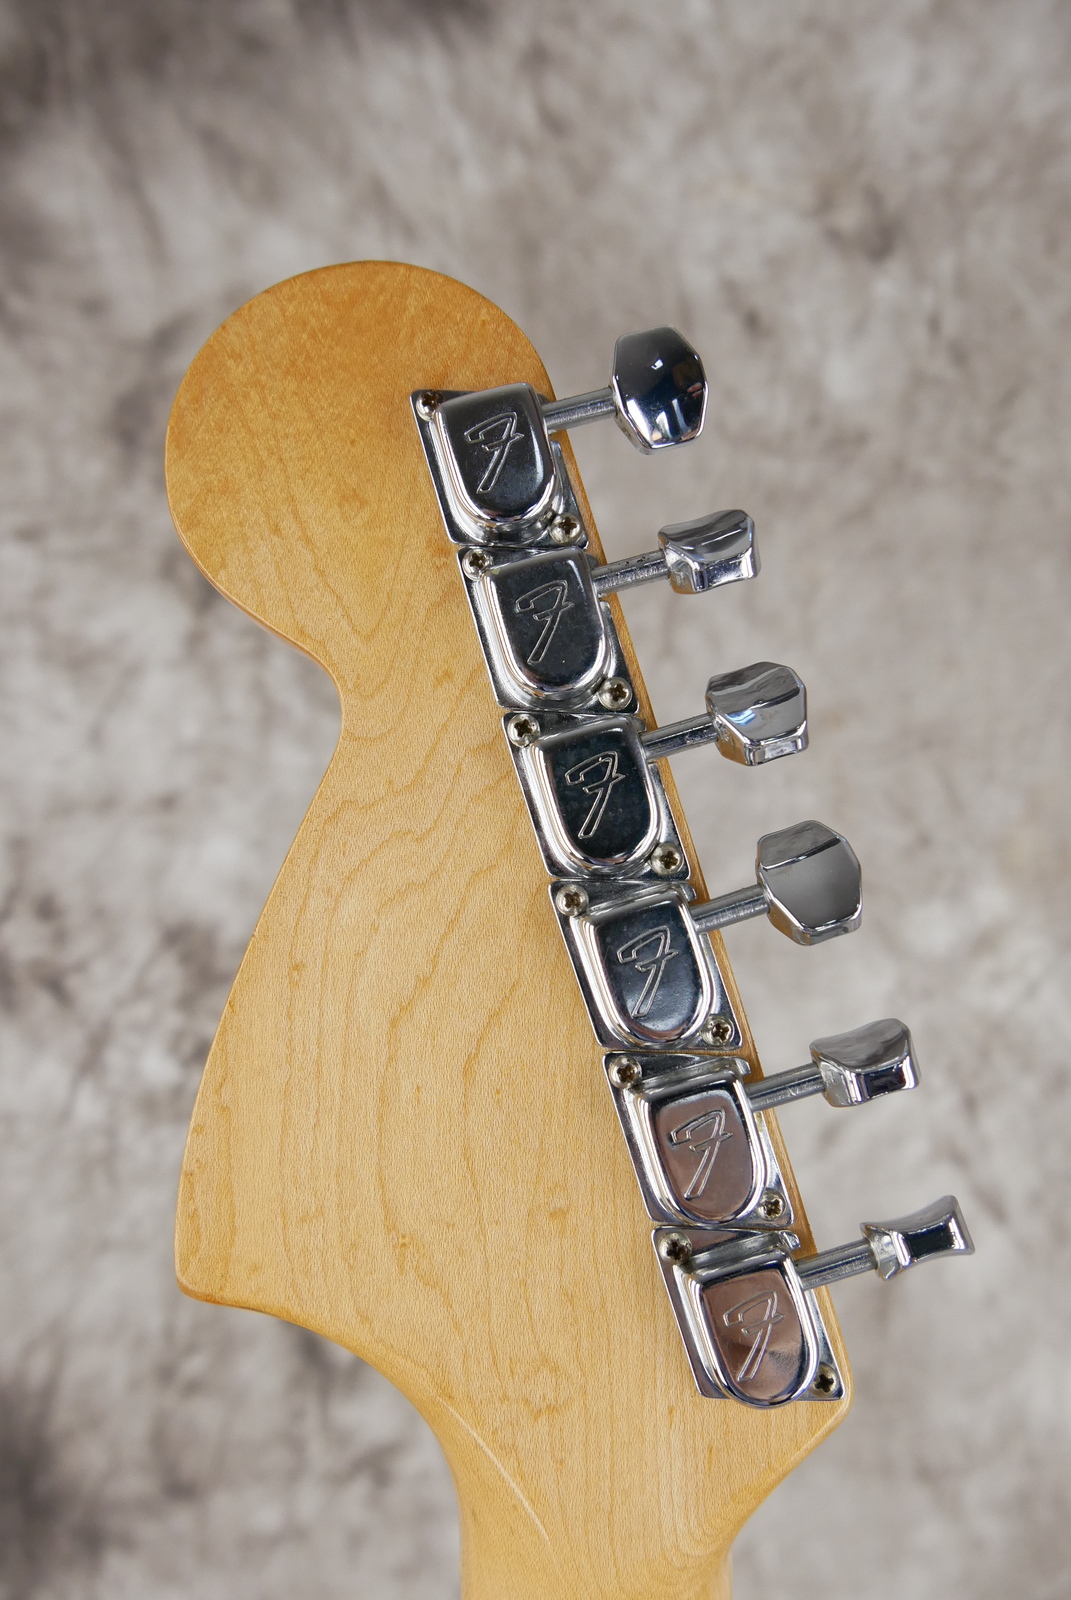 Fender_Stratocaster_10_piece_body_natural_USA_1977-010.JPG